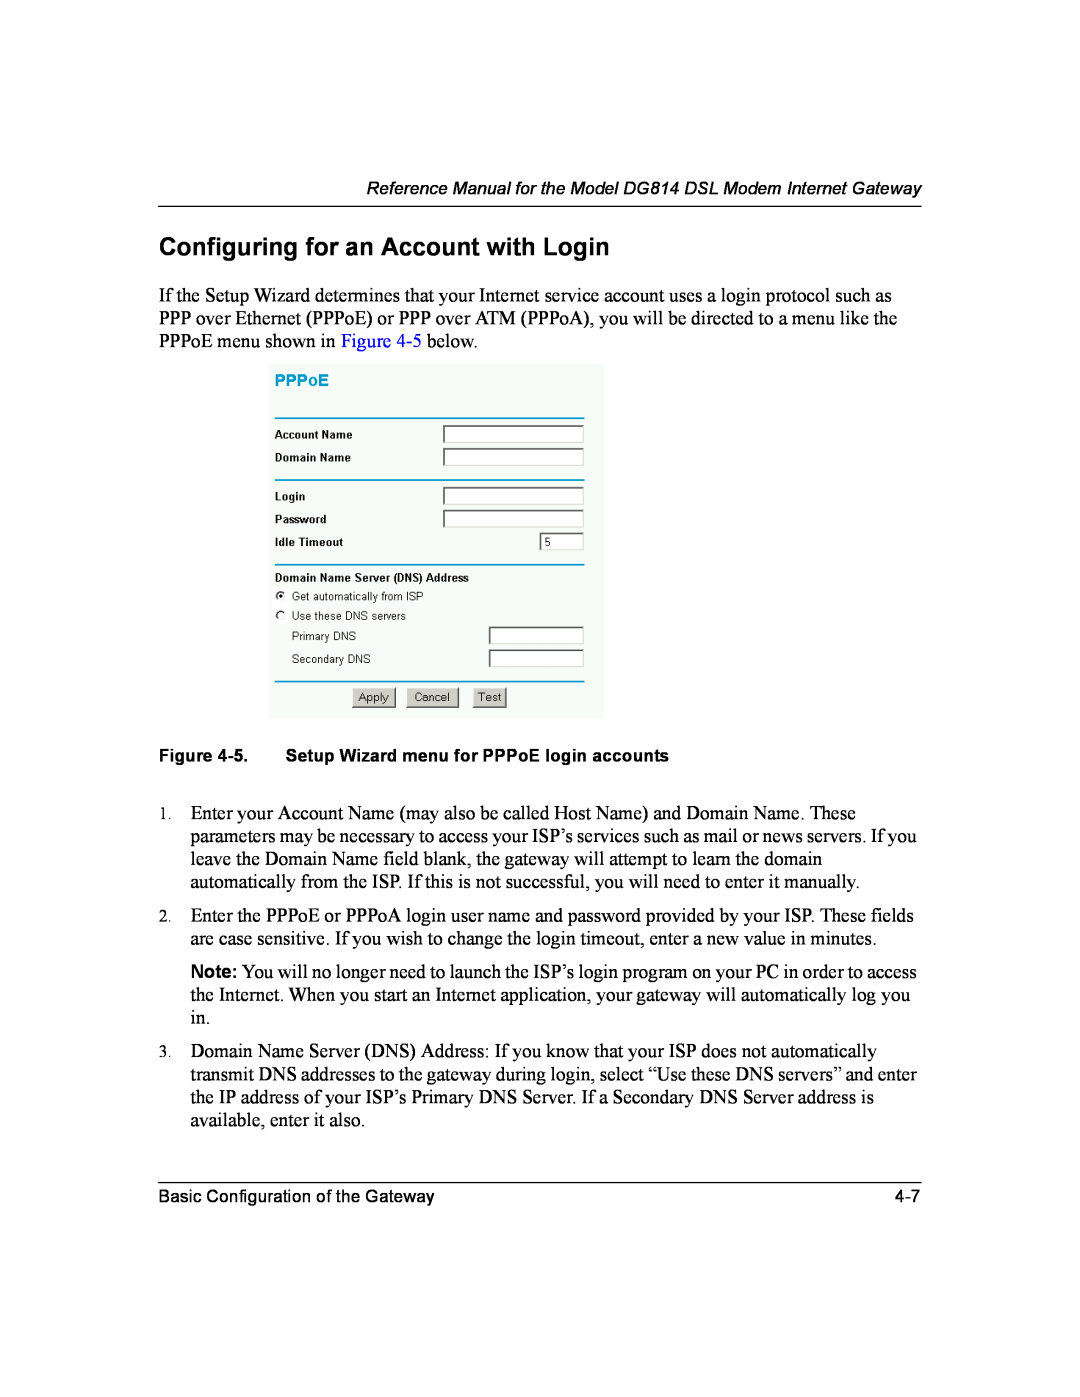 NETGEAR DG814 DSL manual Configuring for an Account with Login, 5. Setup Wizard menu for PPPoE login accounts 